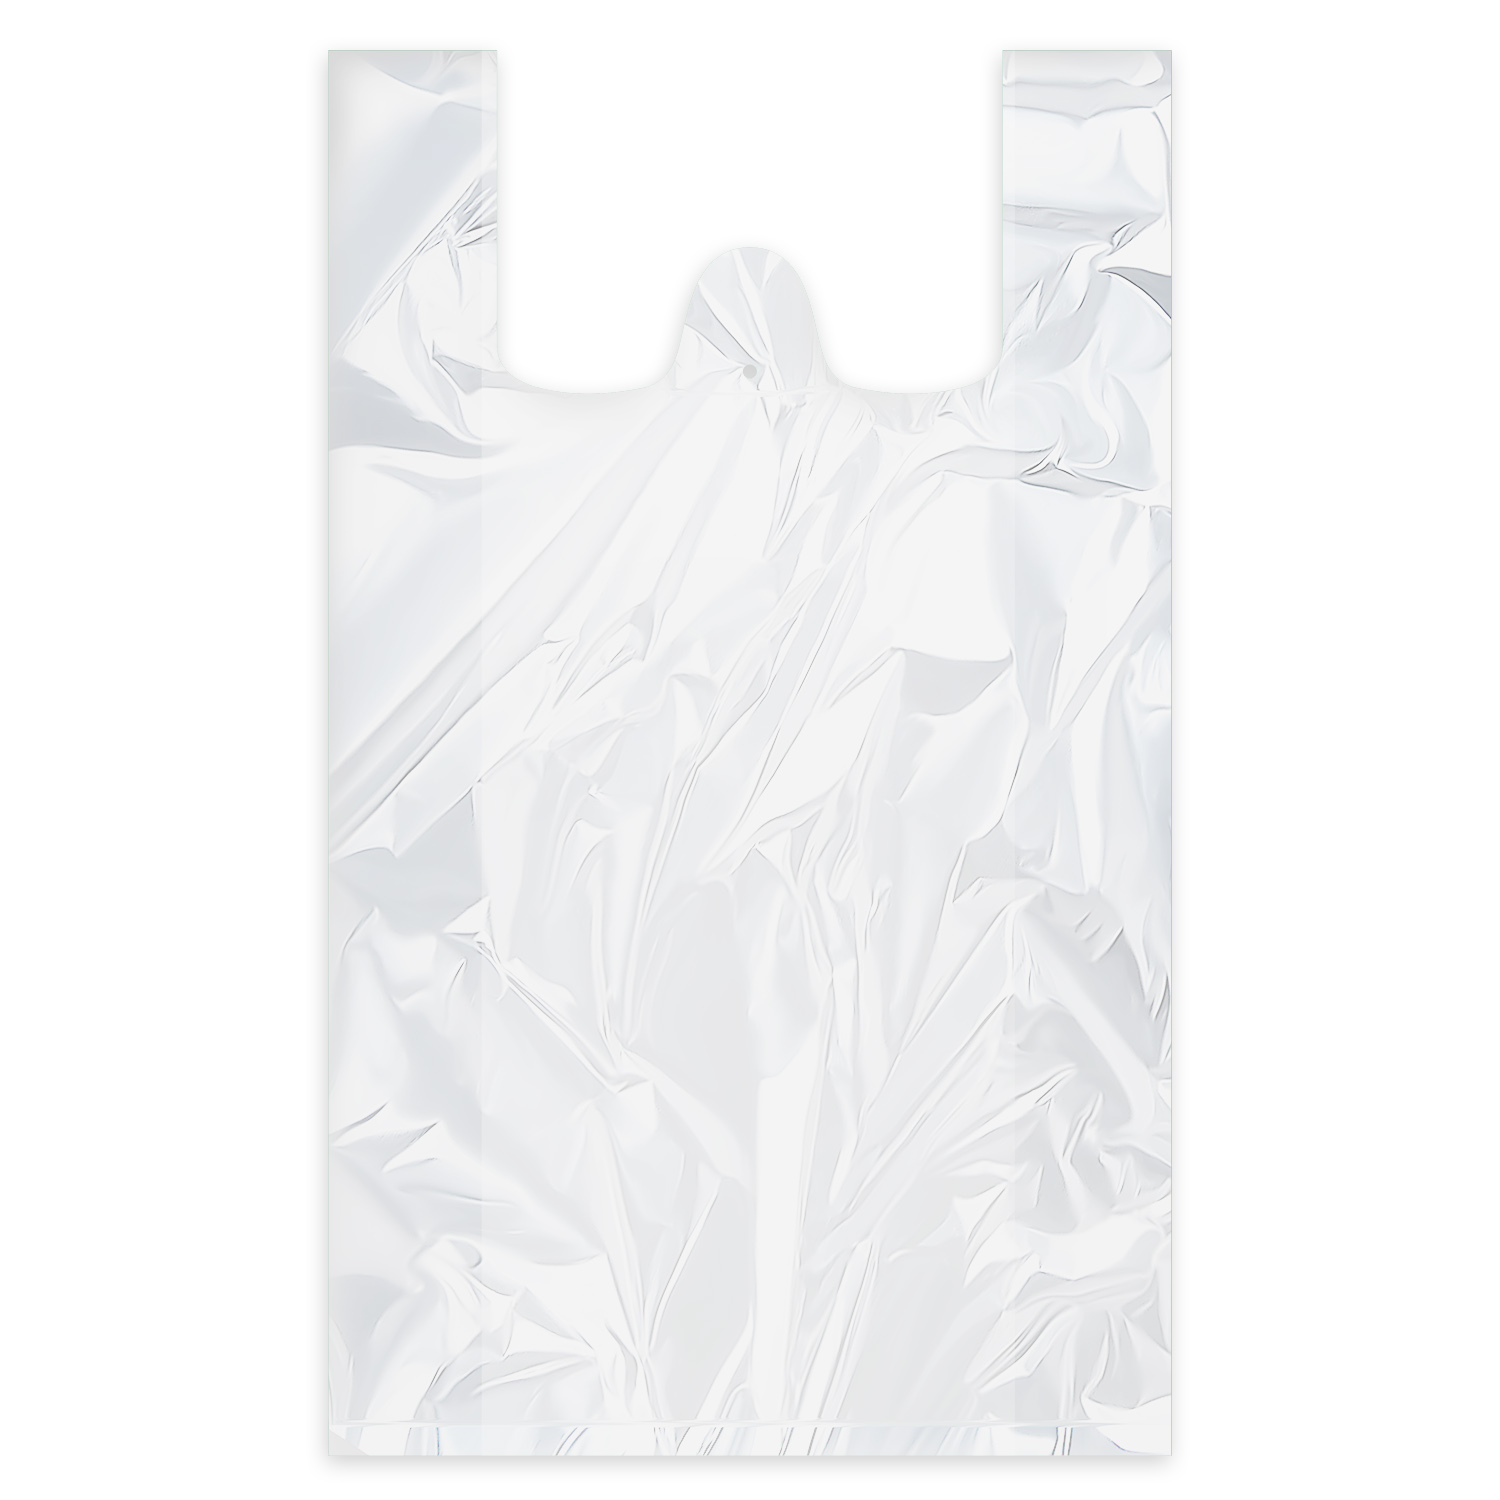 Hemdchen-Tragetasche (HDPE) extra-stark weiß 24+11 x 46 cm 5kg - 100 Stück